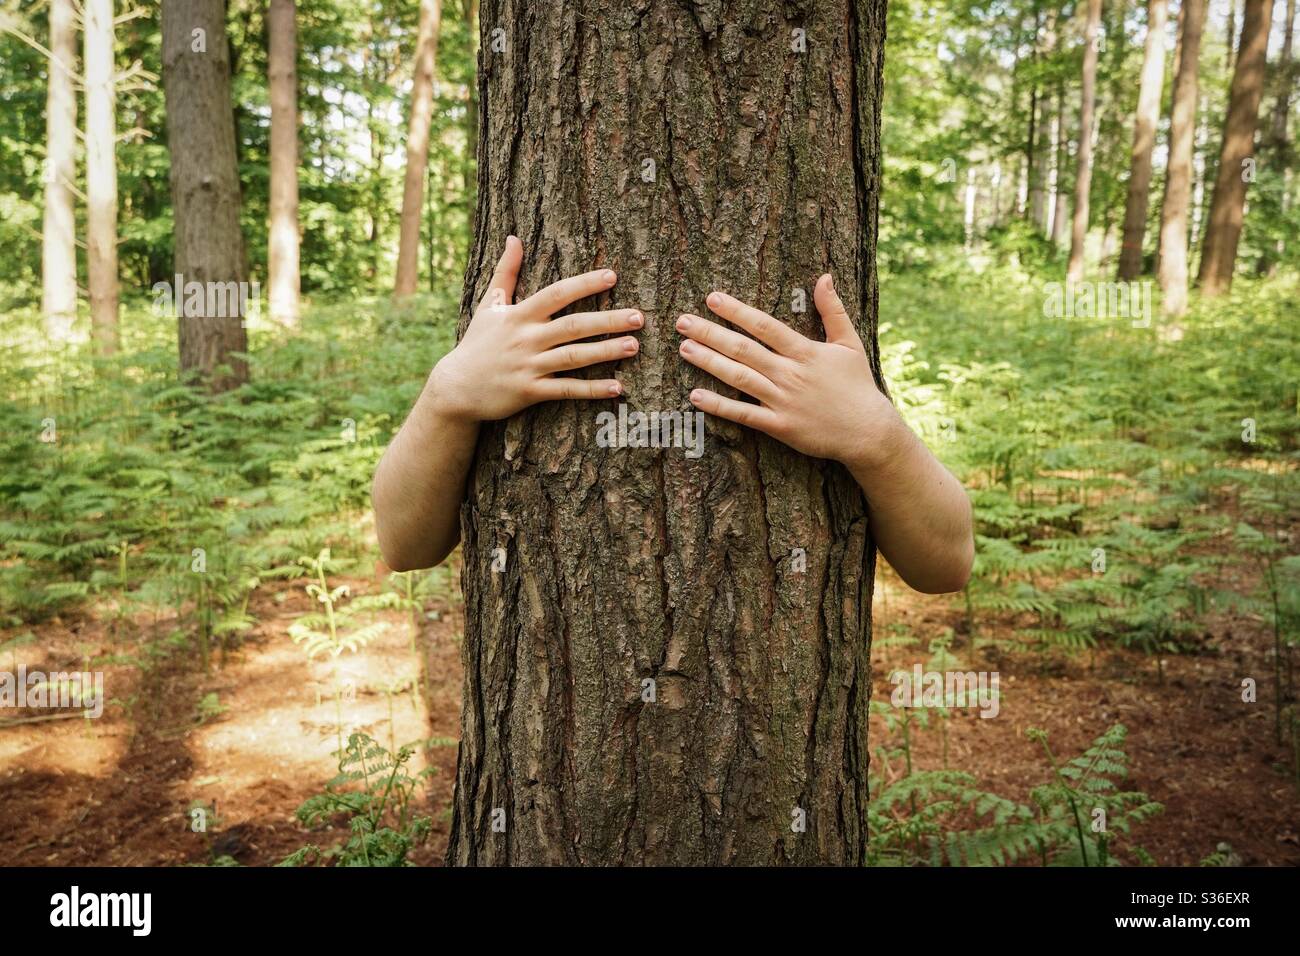 A tree hugger hugging a tree trunk Stock Photo